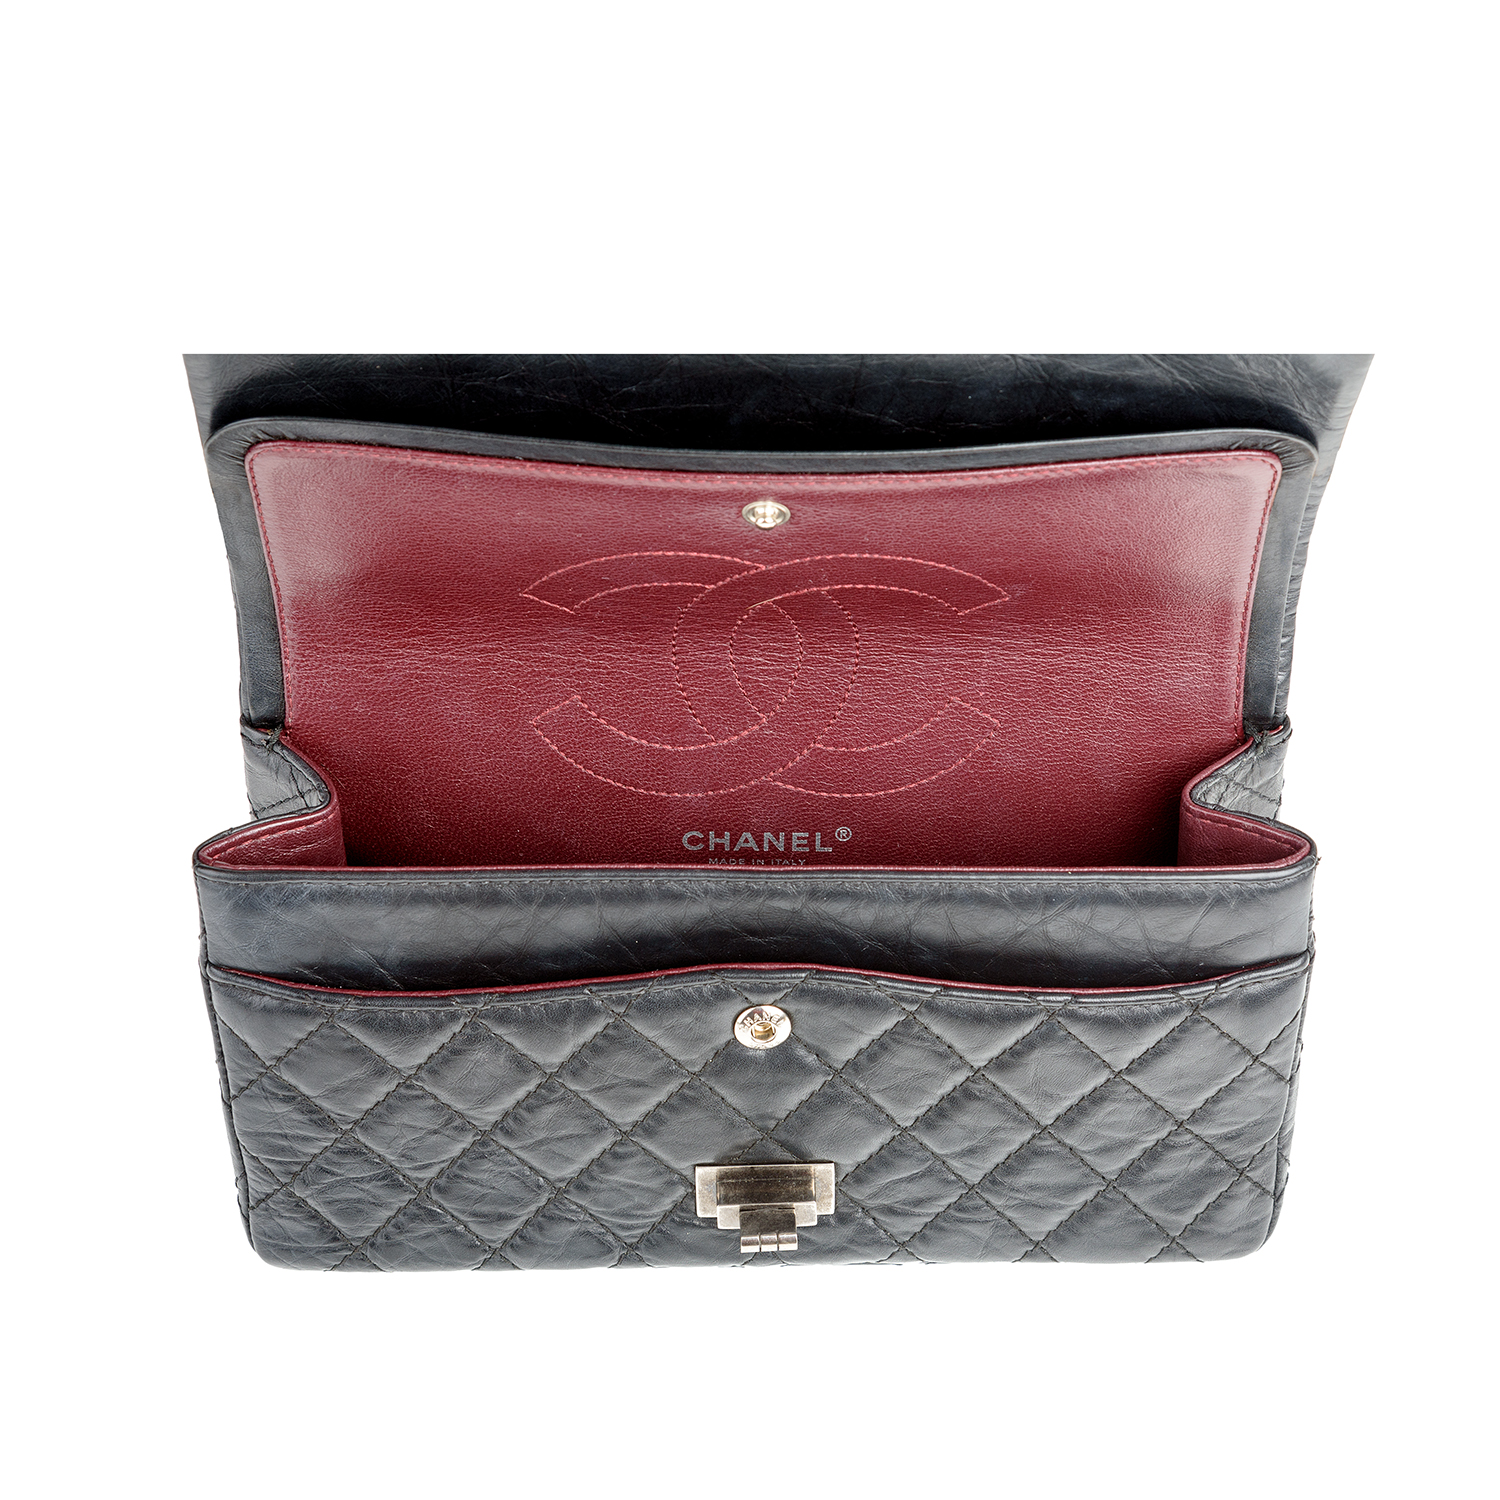 Handbag for rent Chanel Reissue 2.55 - Rent Fashion Bag